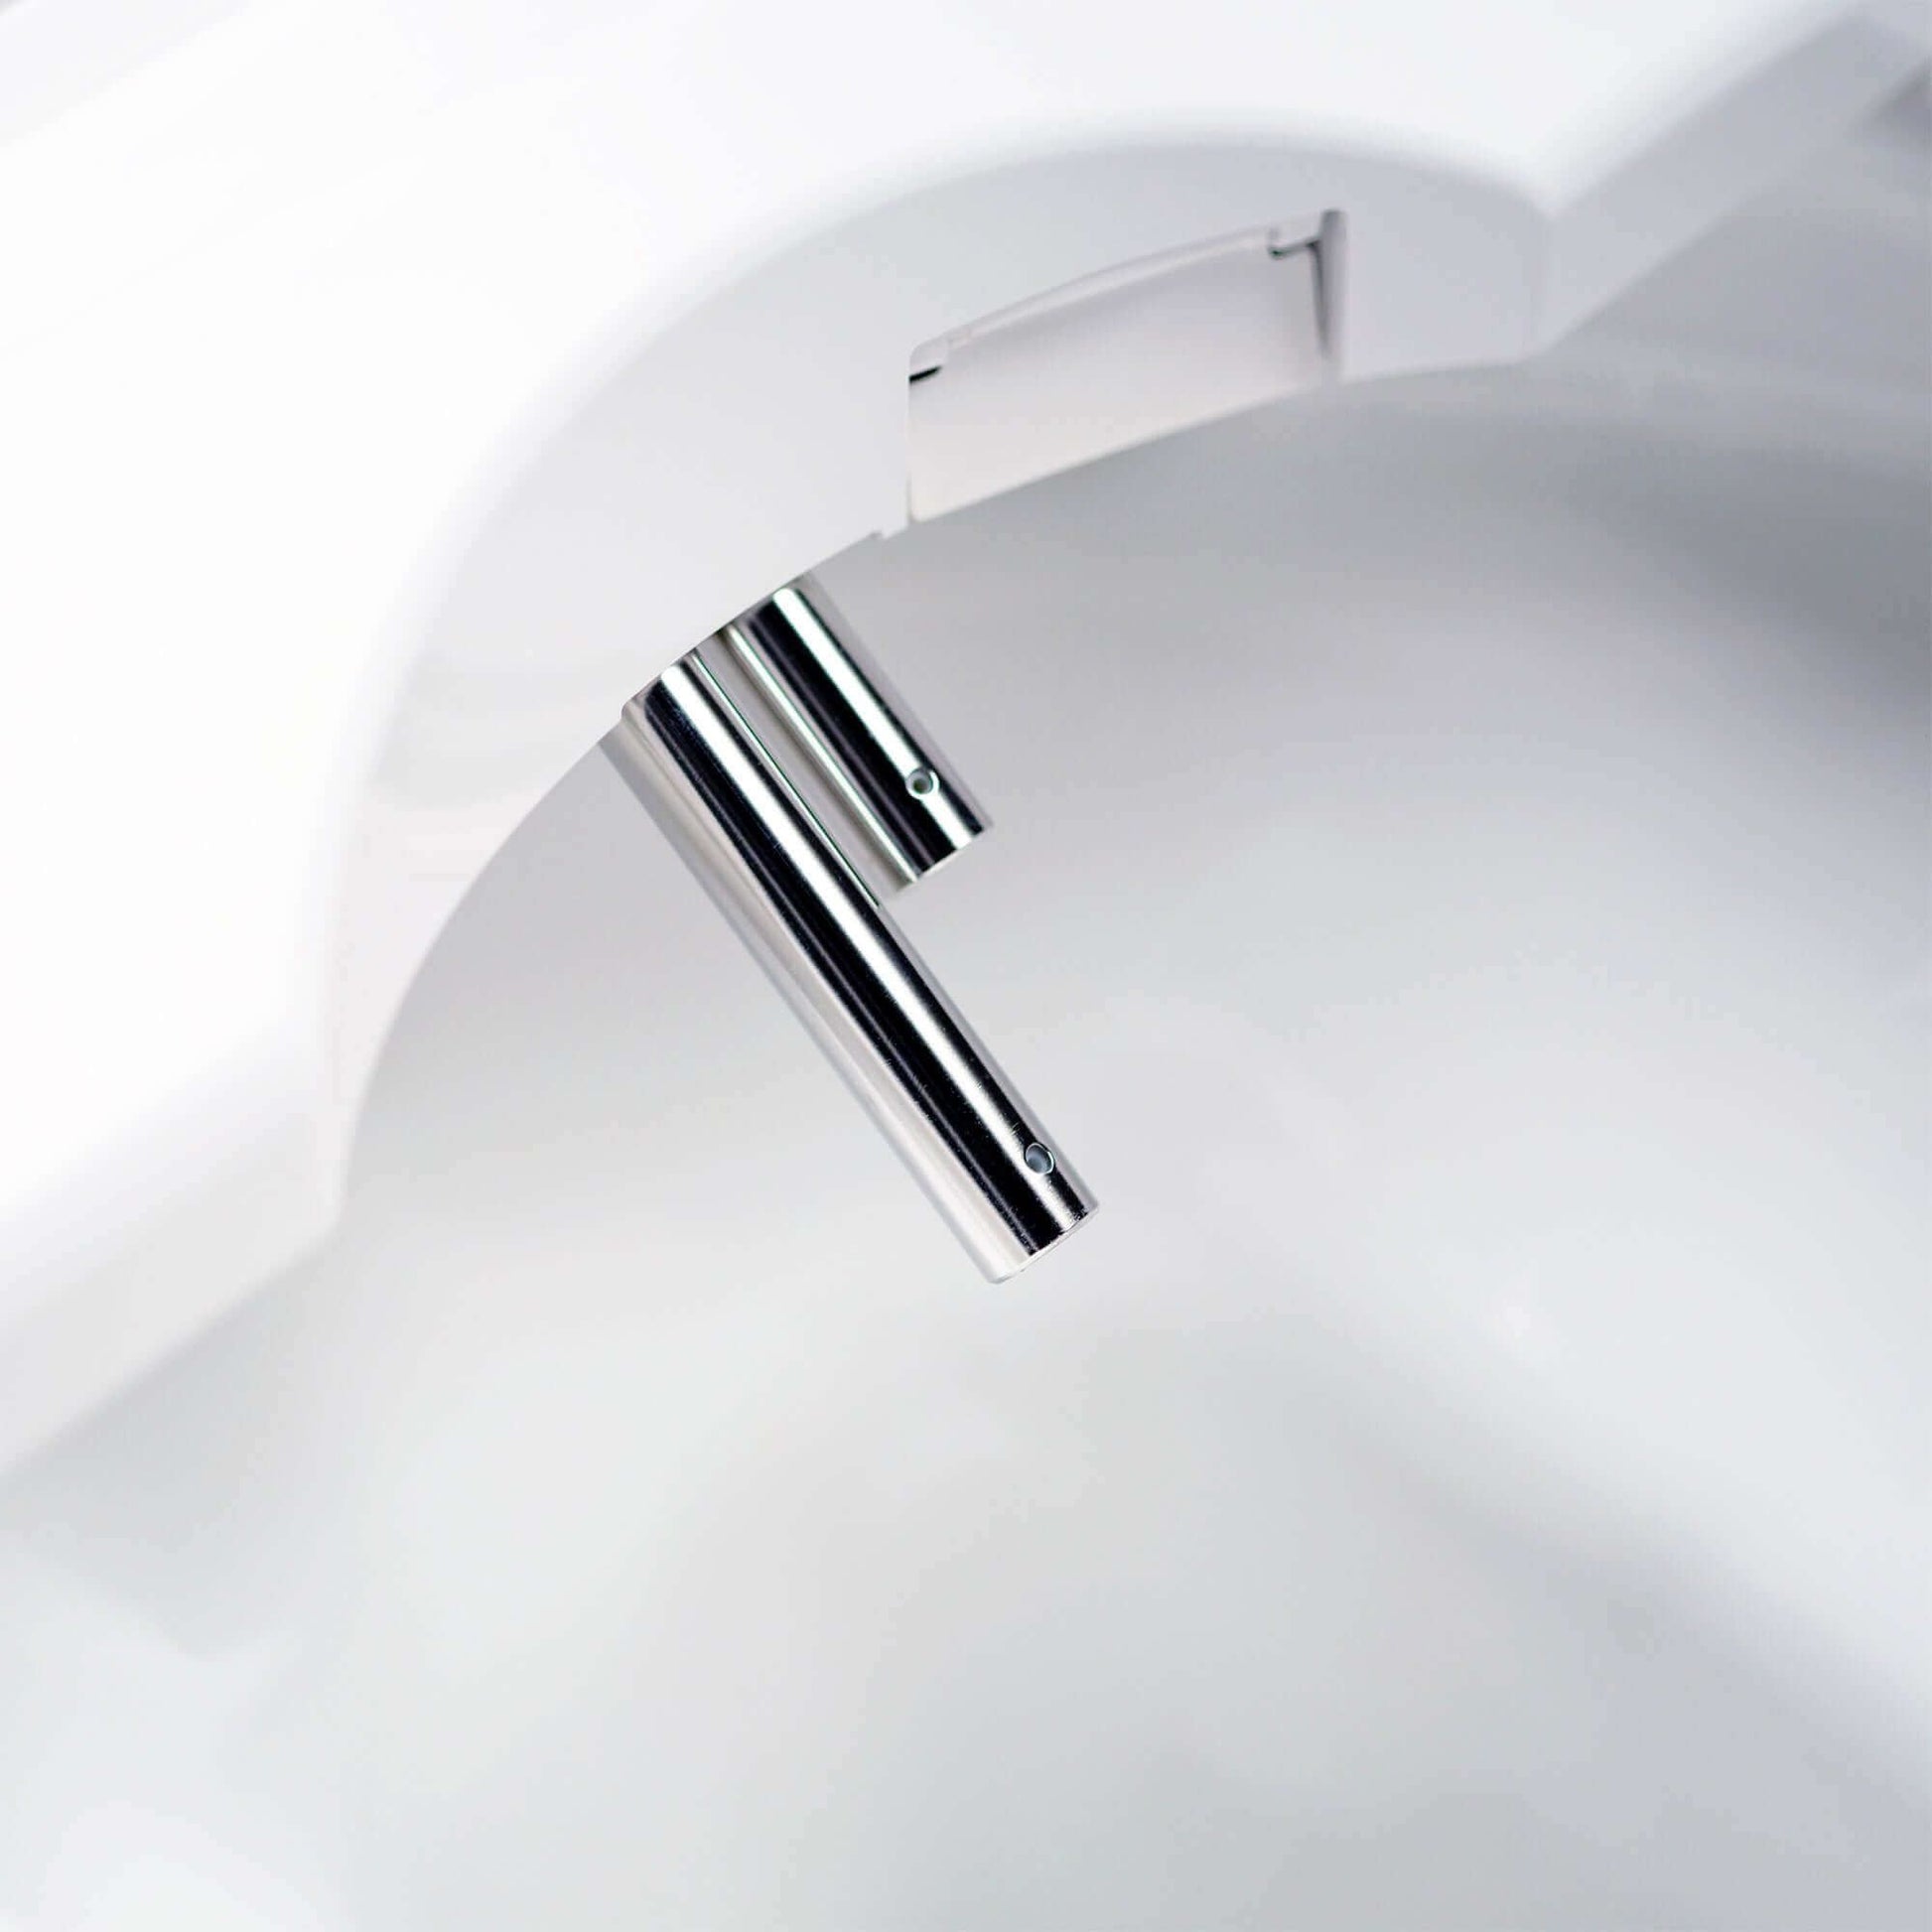 Swash 1400 Bidet Seat - top angled view of nozzles